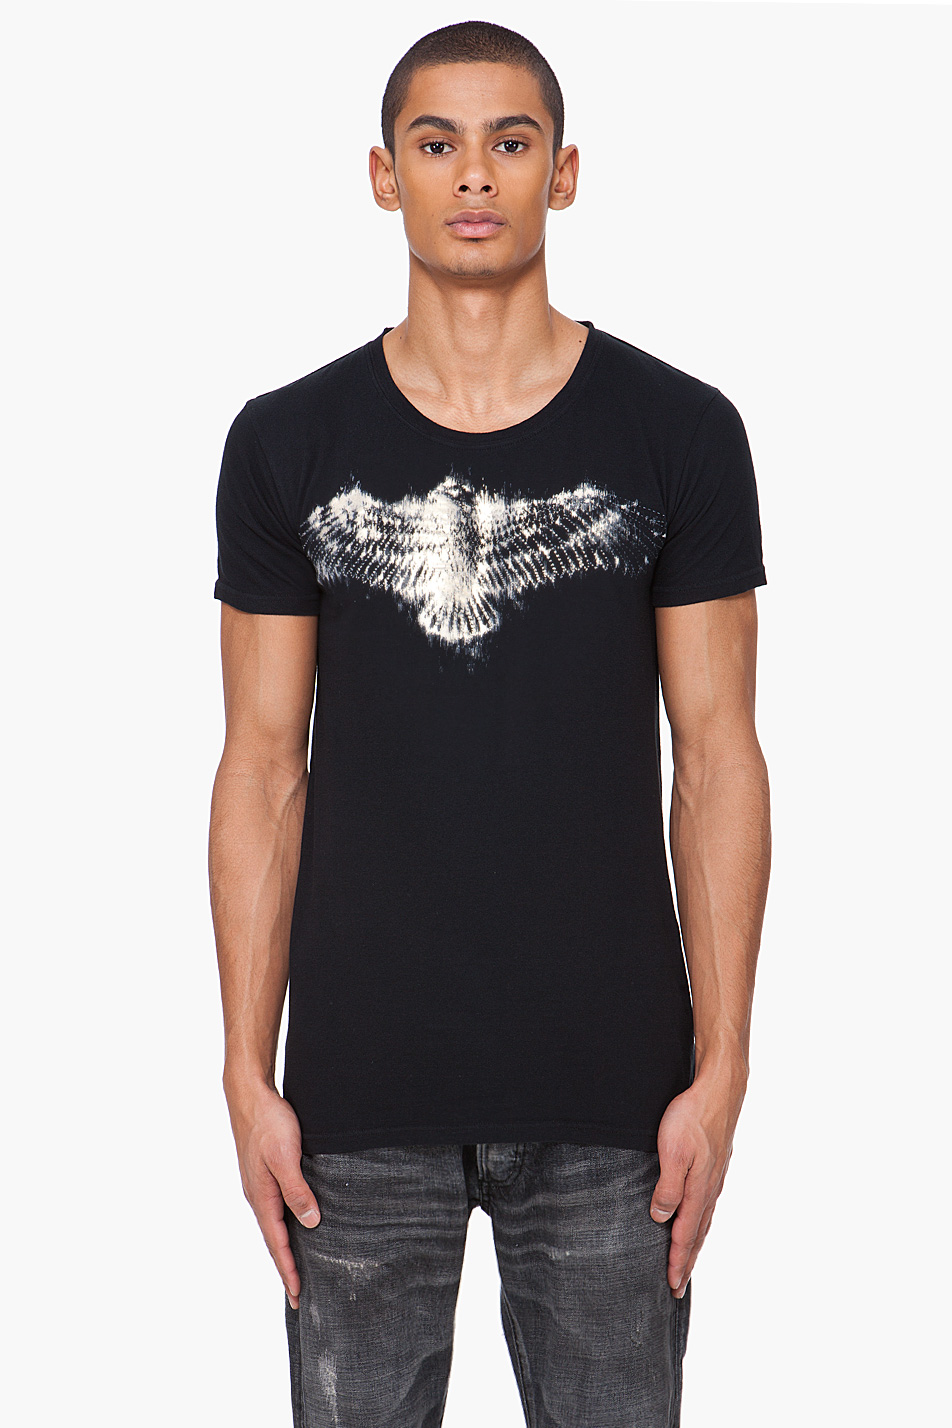 Balmain Black Phoenix T-shirt in Black for Men | Lyst